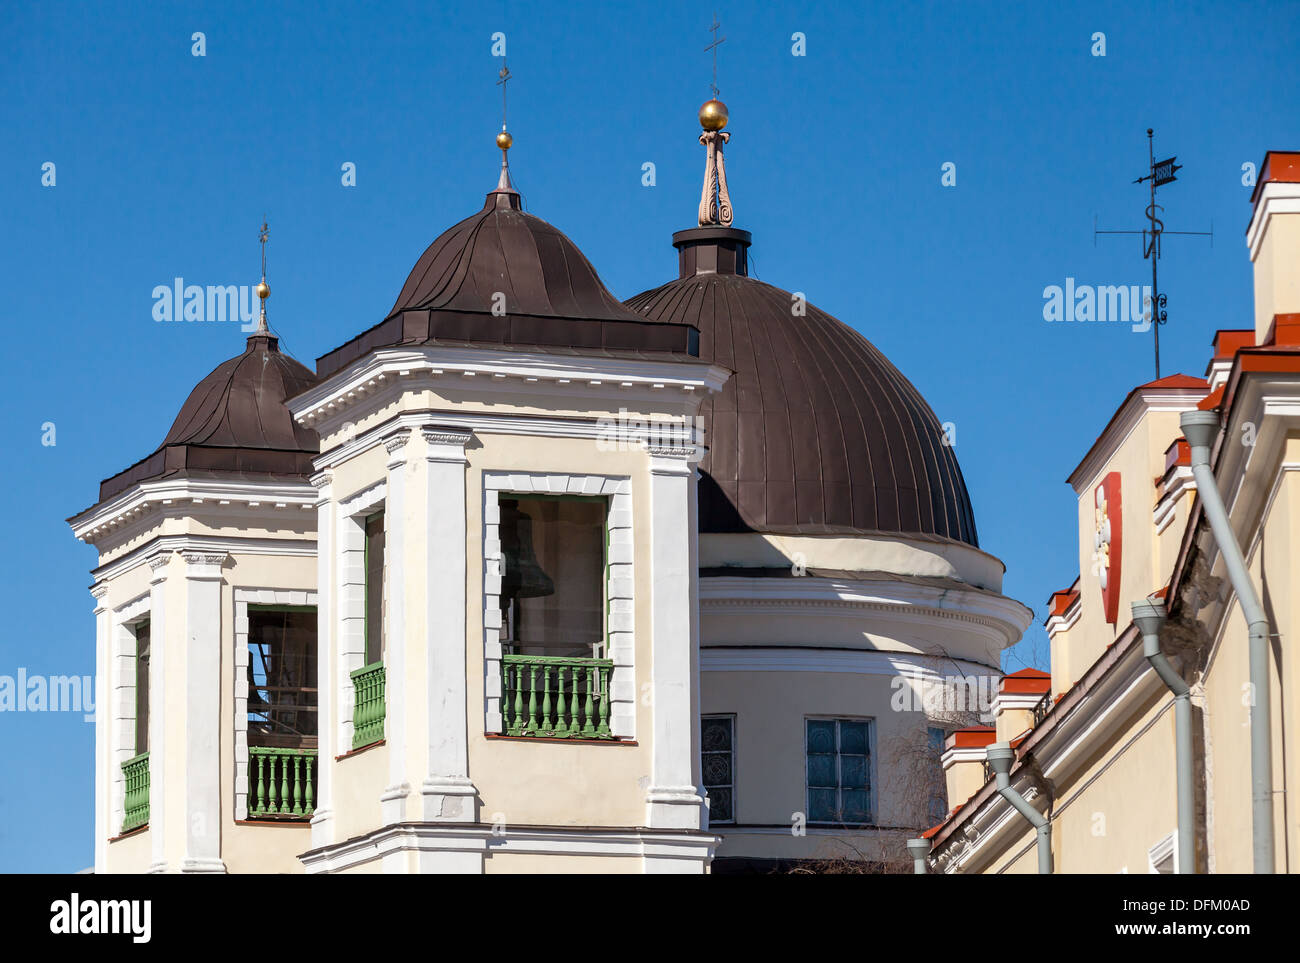 Dome of St. Nicholas Orthodox Church, Tallinn, Estonia Stock Photo